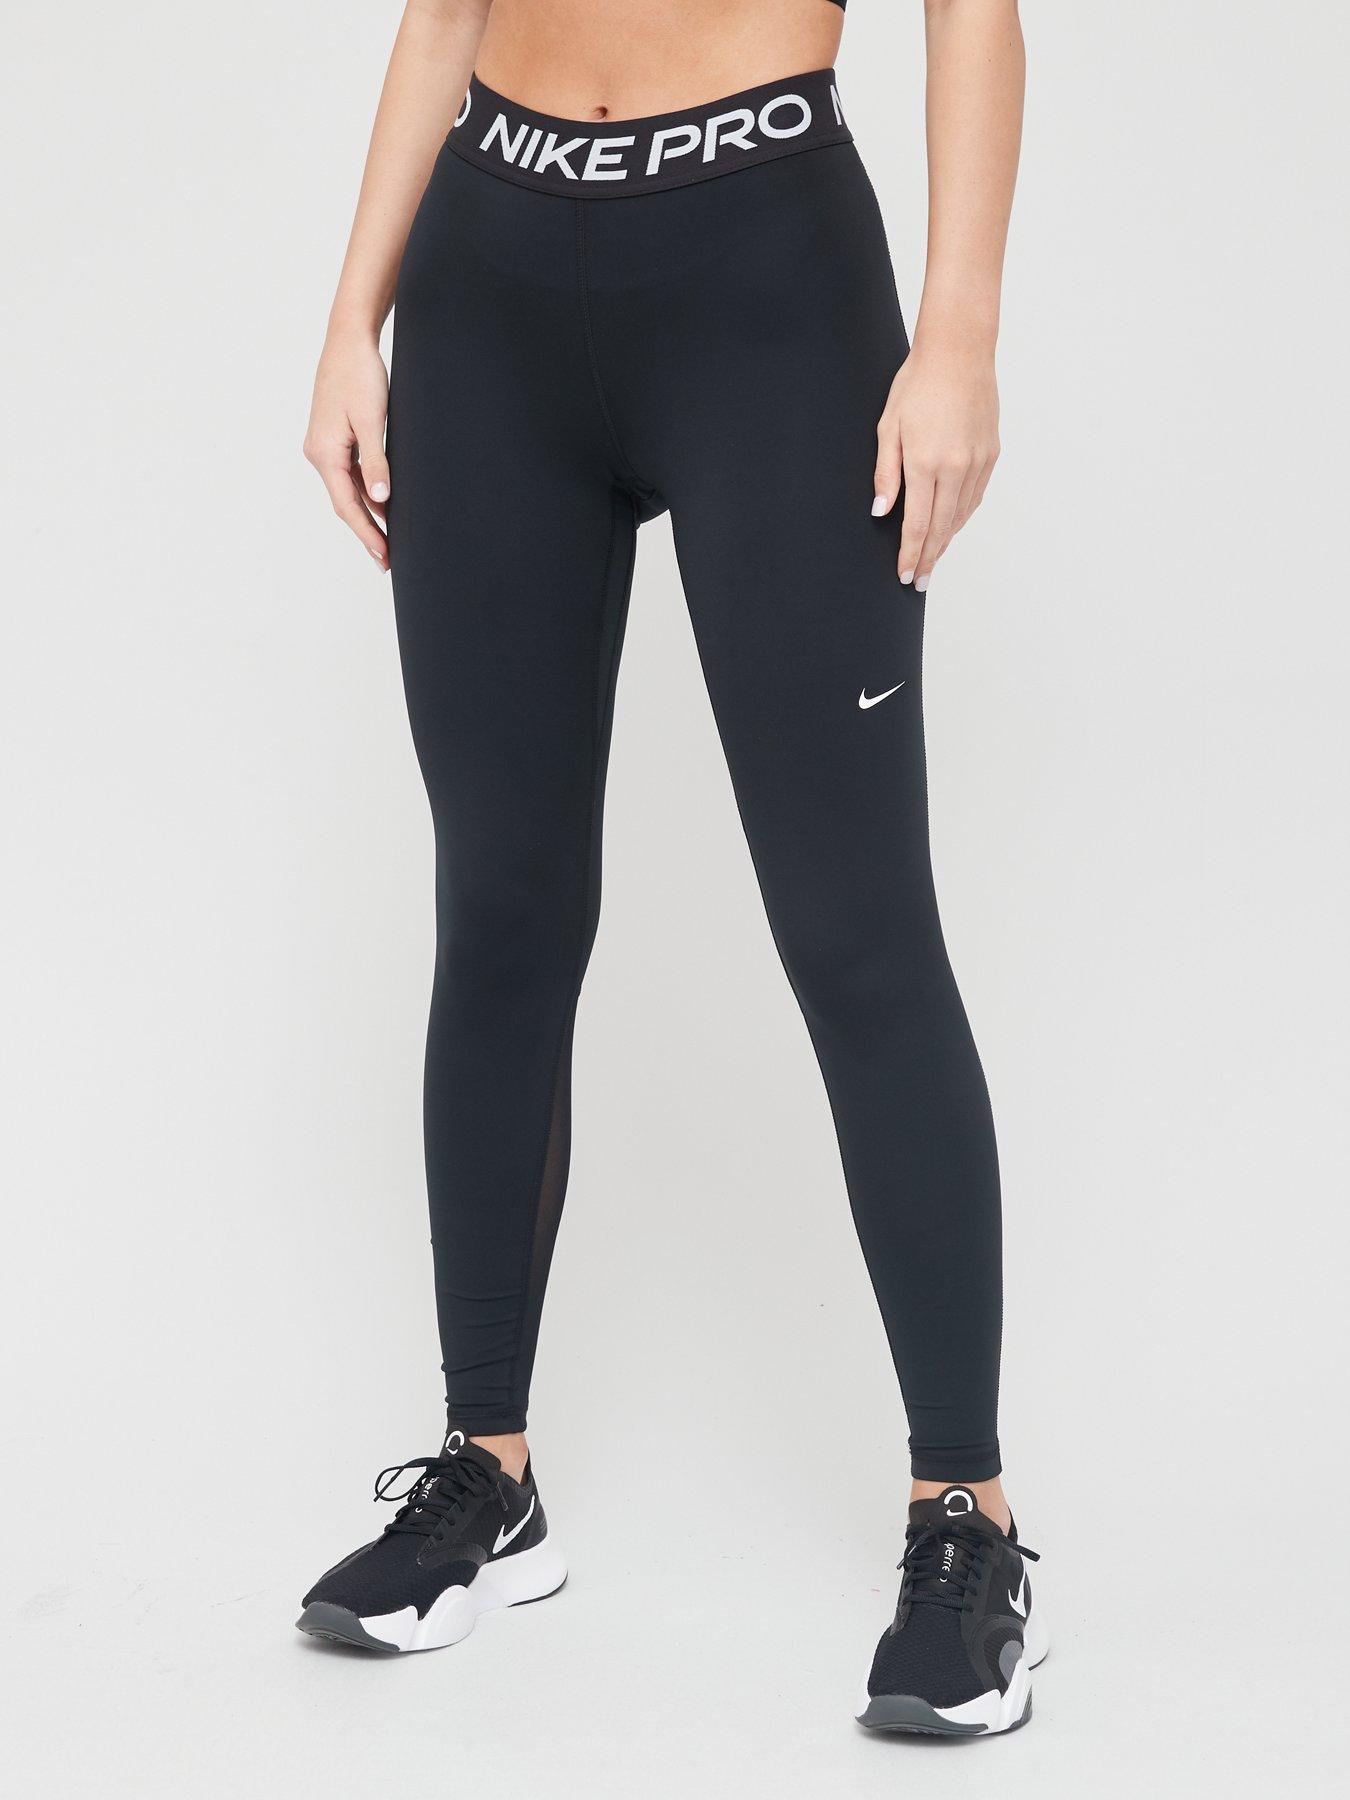 Nike Dry Academy black pants for women - 47€